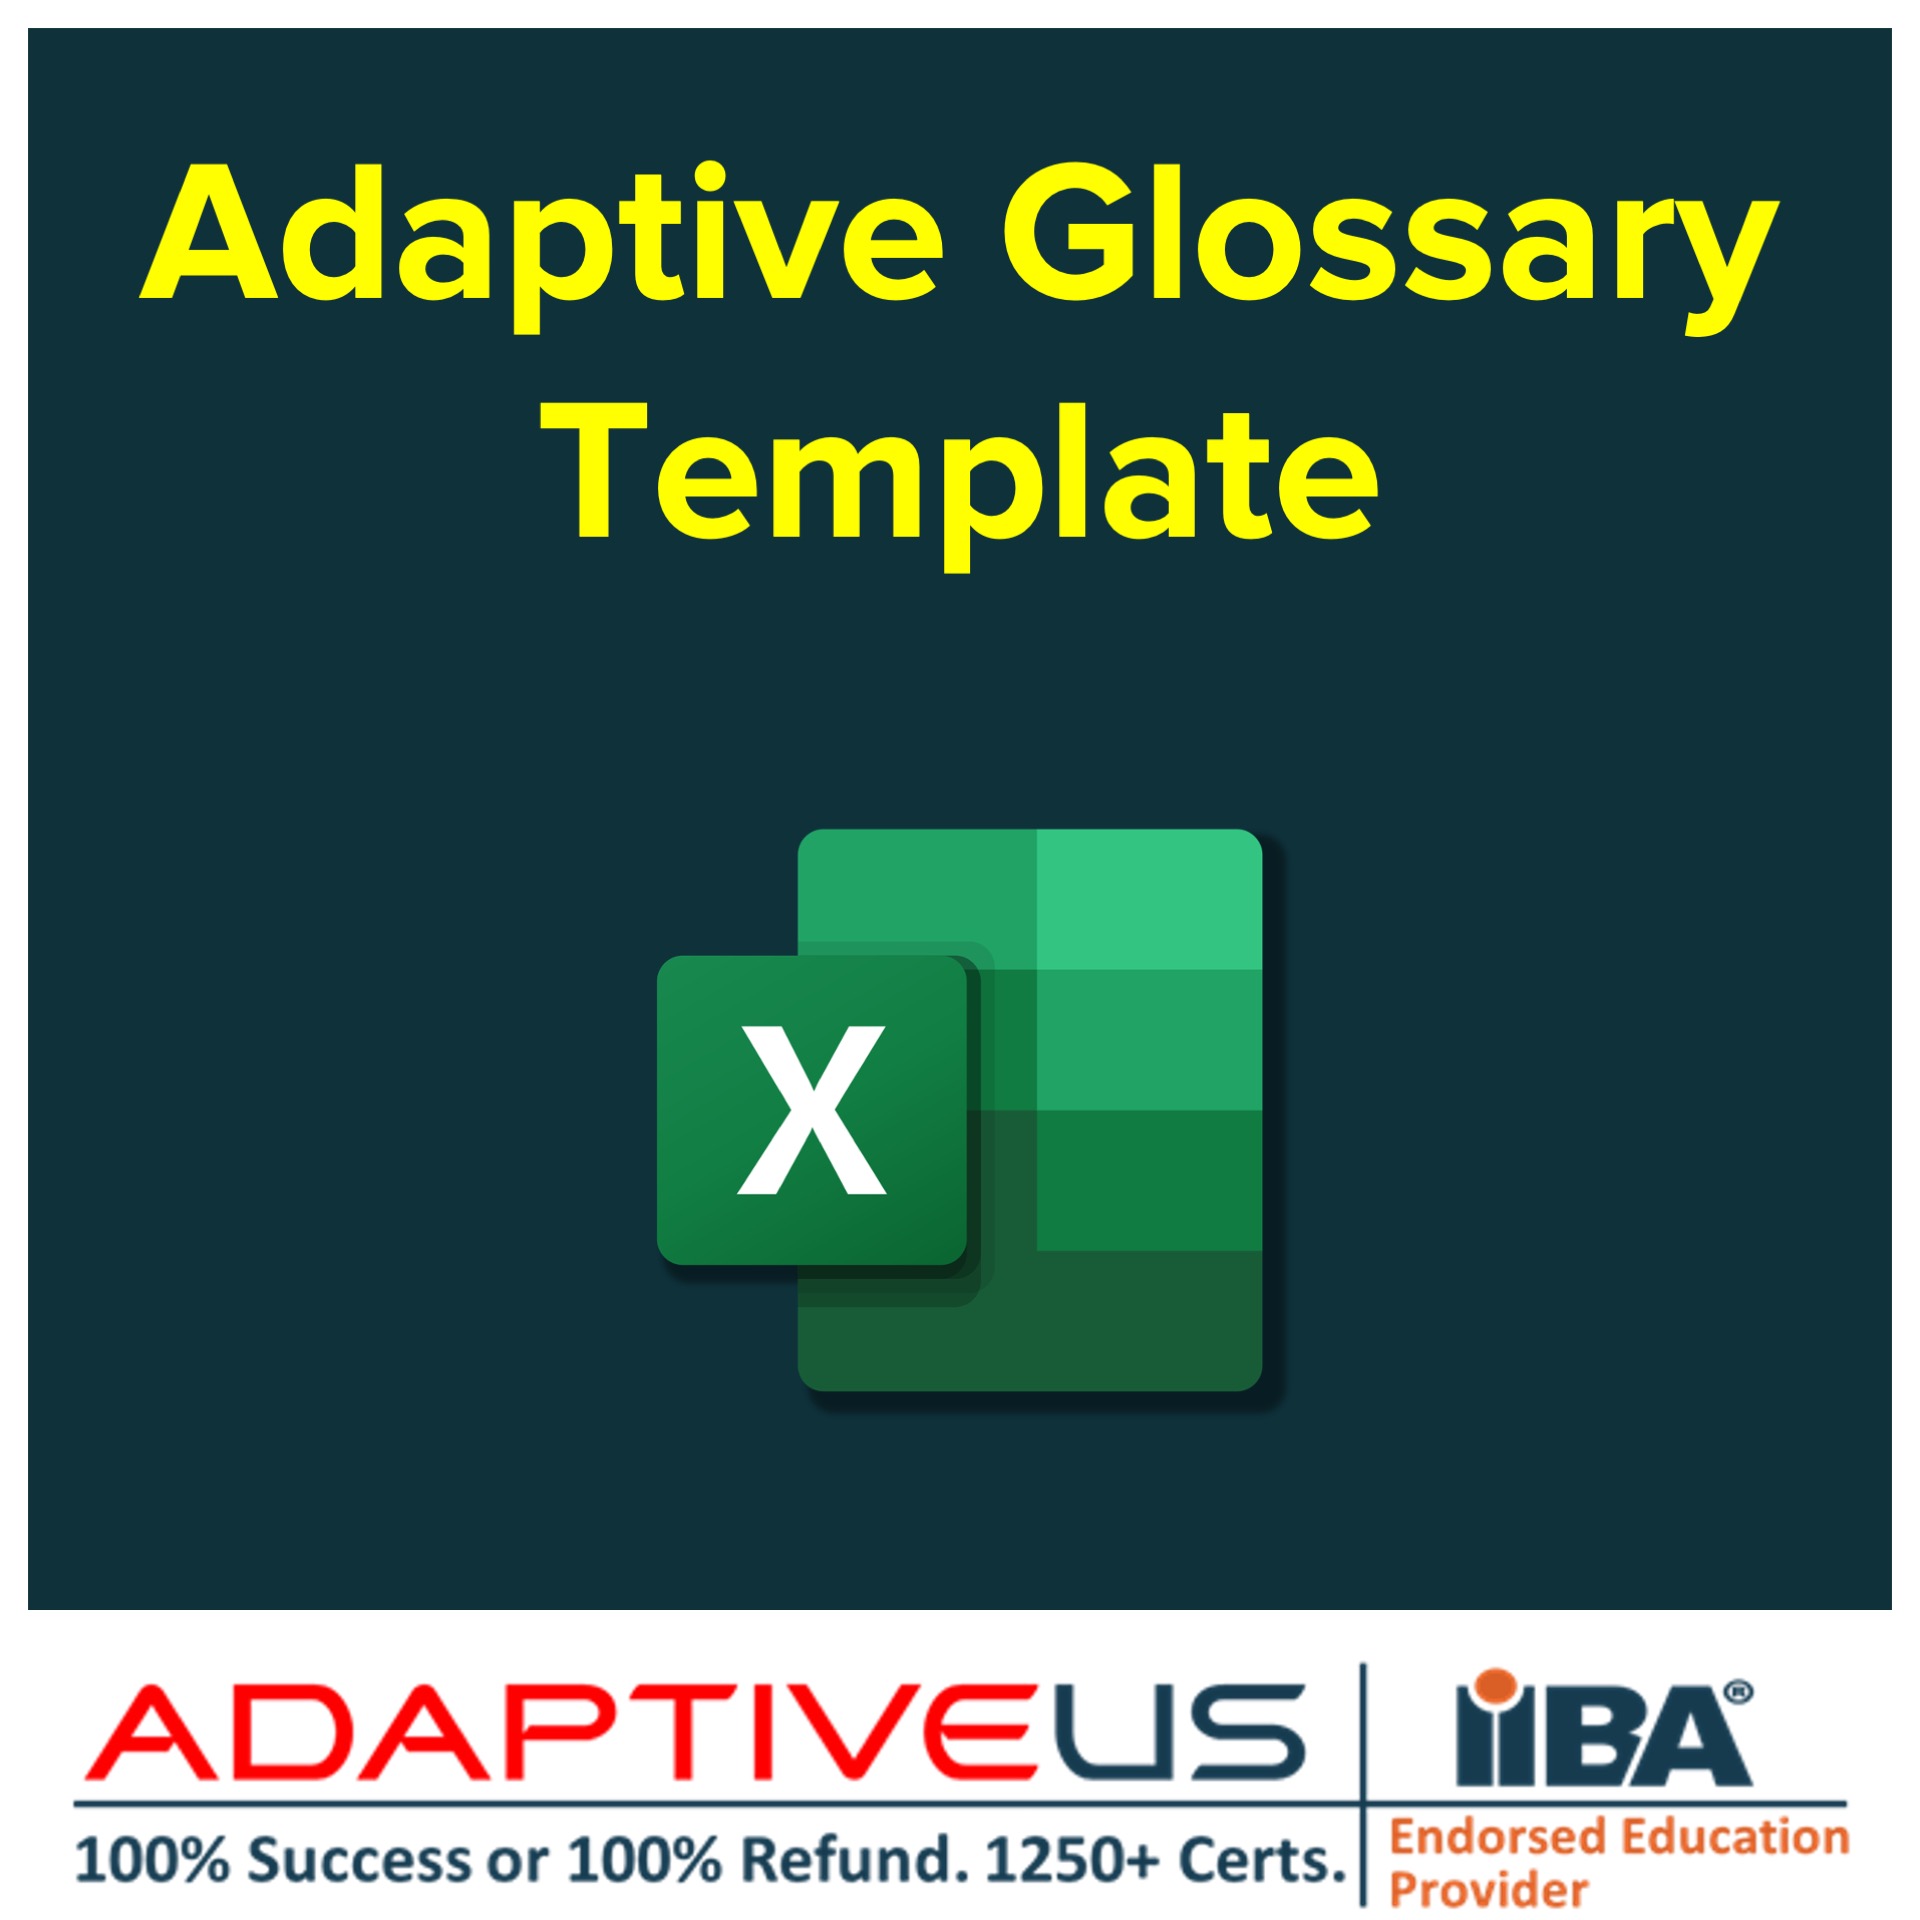 Adaptive Glossary Template